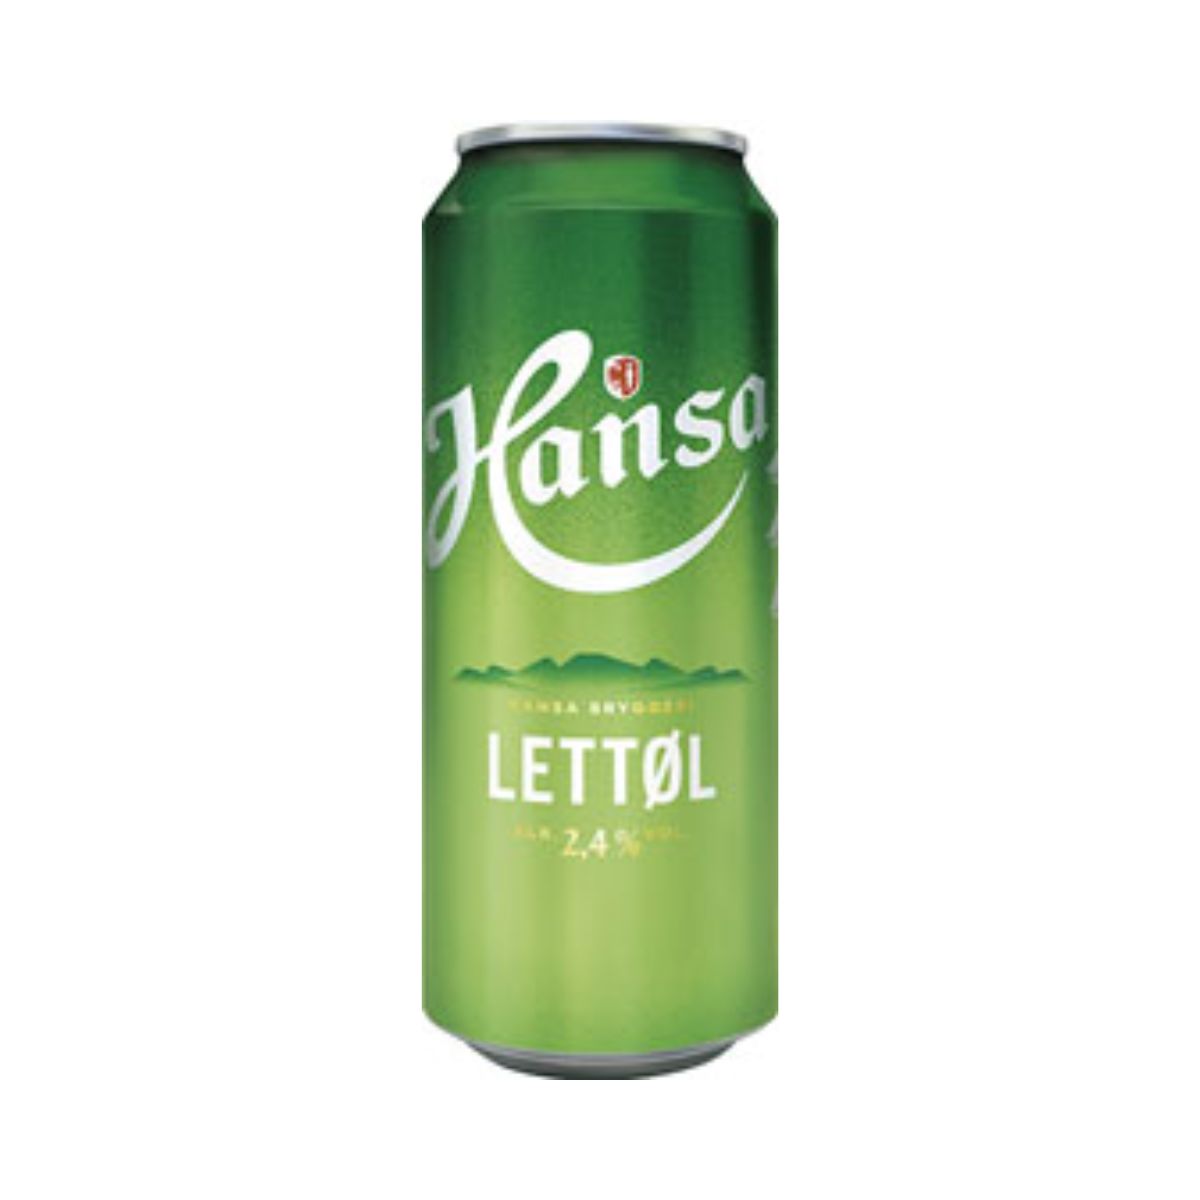 Hansa Lettøl 0.5l bx